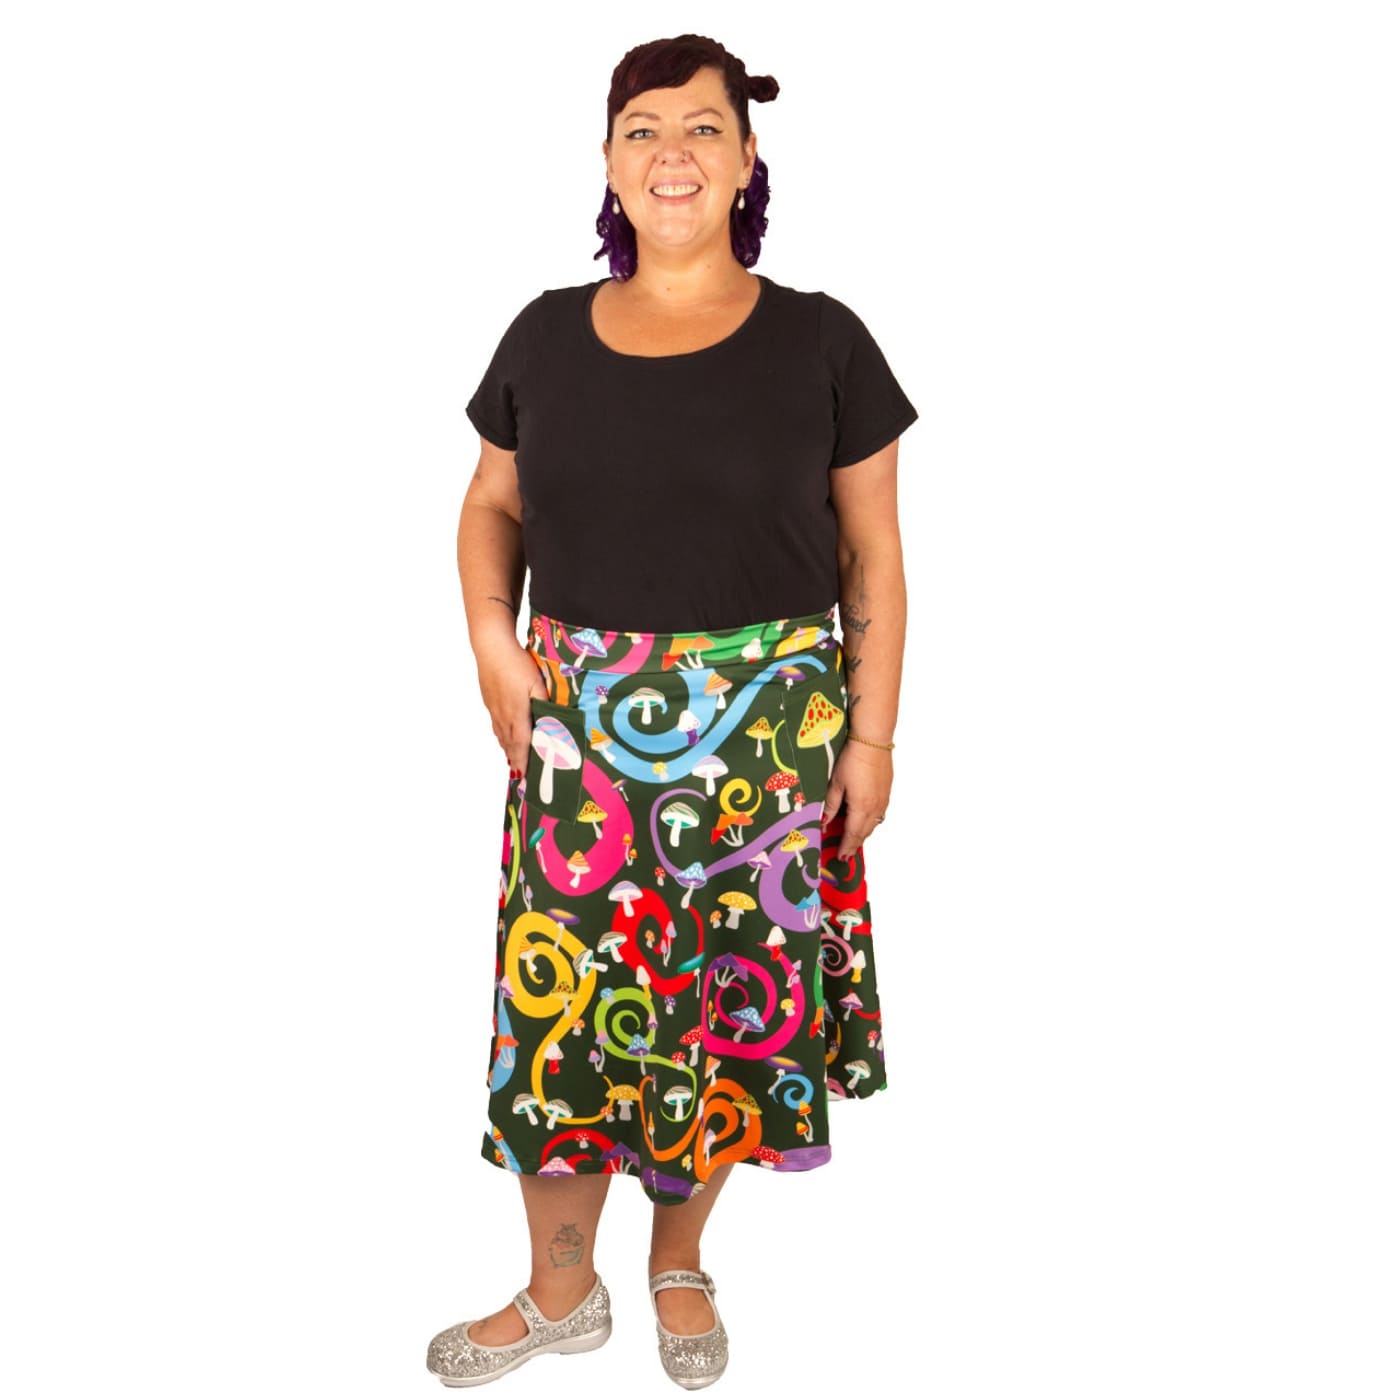 Toadstool Original Skirt by RainbowsAndFairies.com.au (Mushroom - Psychedelic Swirls - Retro - Kitsch - Aline Skirt With Pockets - Vintage Inspired) - SKU: CL_OSKRT_TOADS_ORG - Pic-07